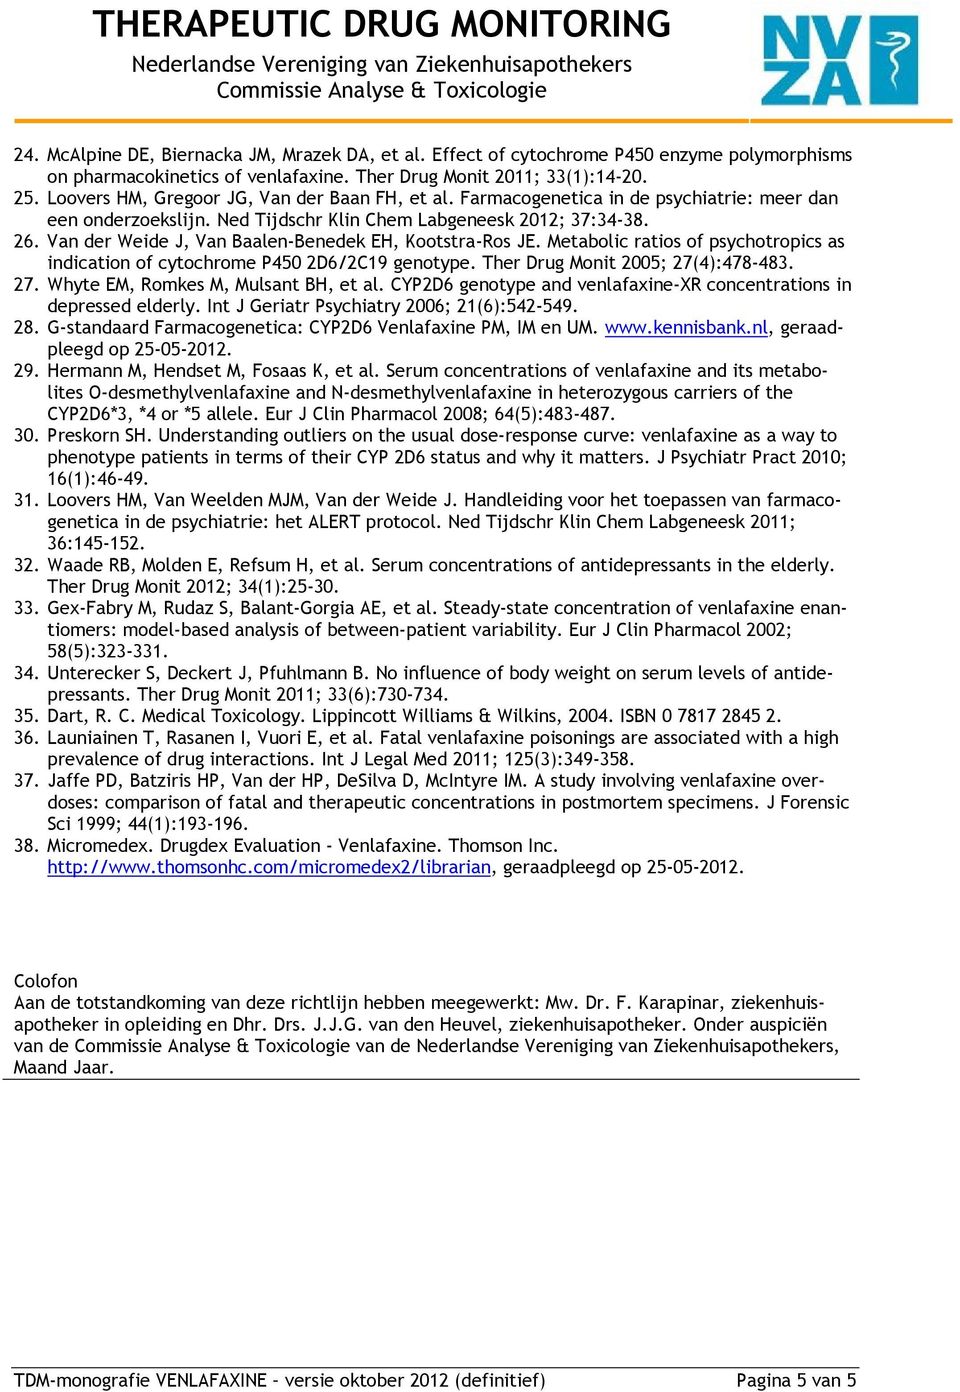 Van der Weide J, Van Baalen-Benedek EH, Kootstra-Ros JE. Metabolic ratios of psychotropics as indication of cytochrome P450 2D6/2C19 genotype. Ther Drug Monit 2005; 27(